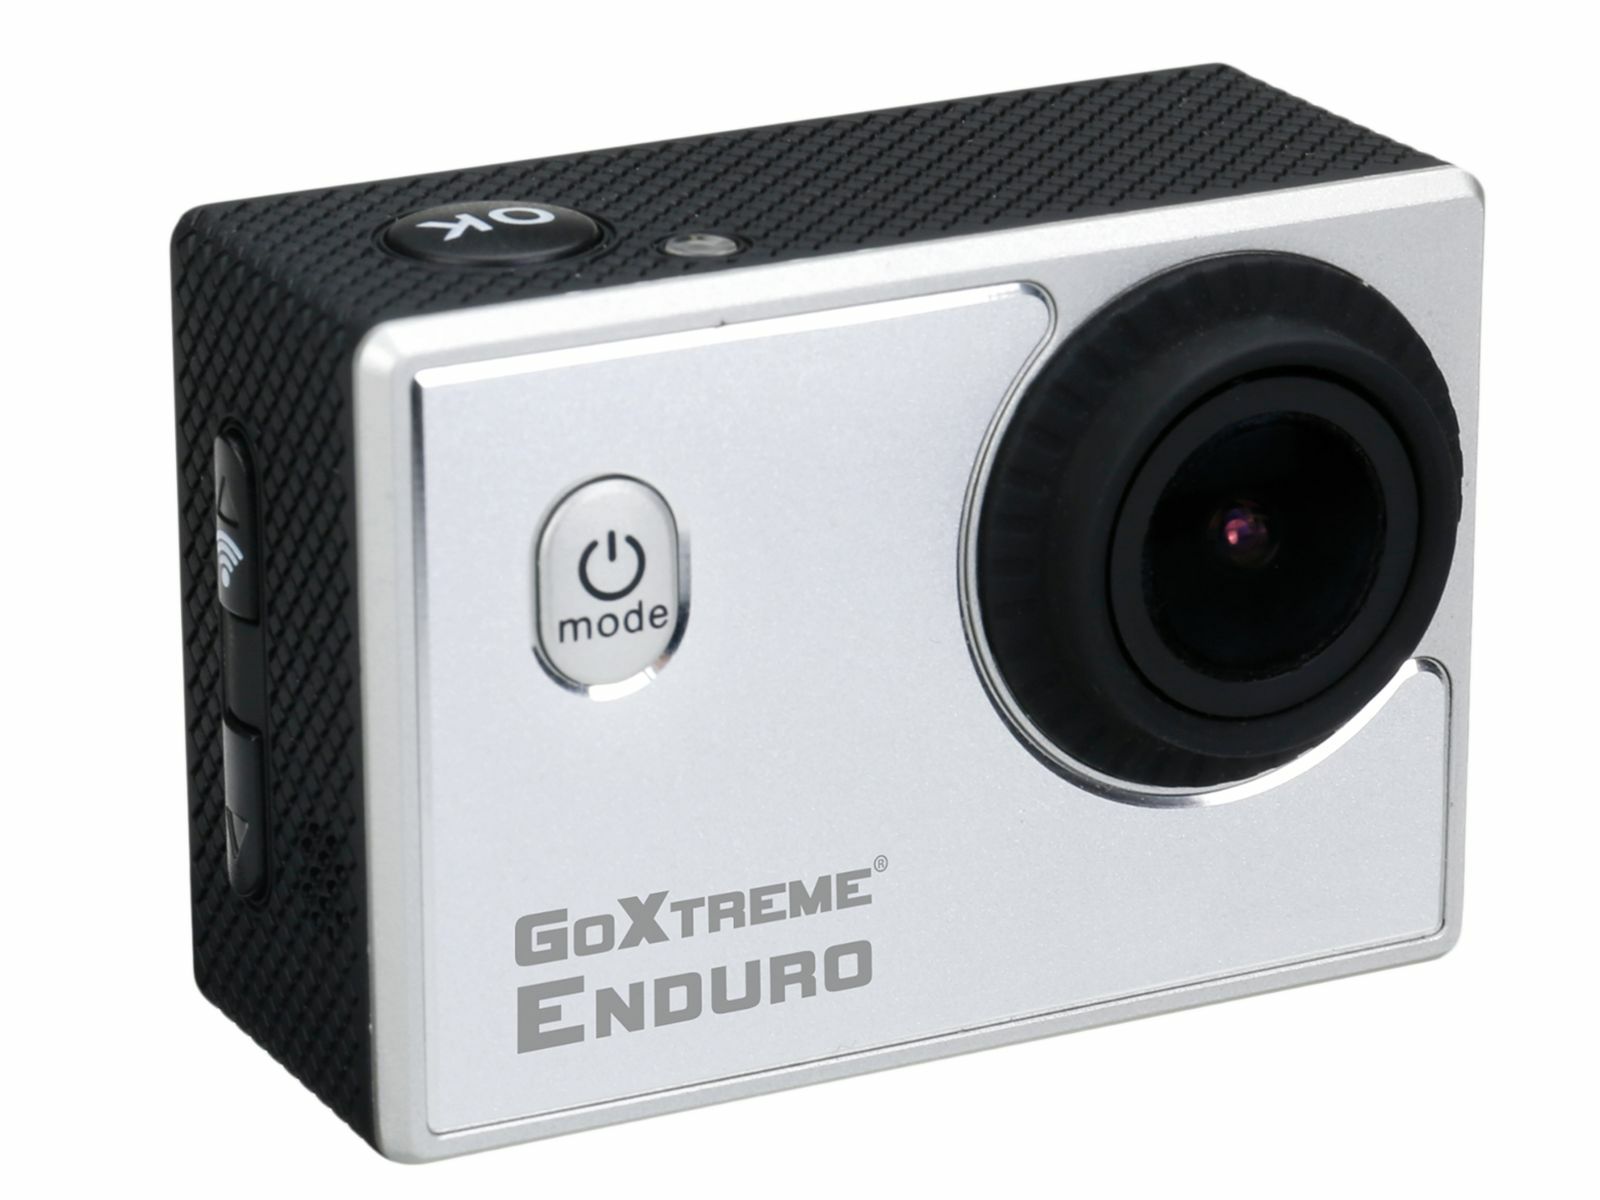 GoXtreme Enduro 2.7K Action Camera Ultra HD 30fps 4MP WiFi Waterproof sportska akcijska kamera vodootporna do 40m (20138)